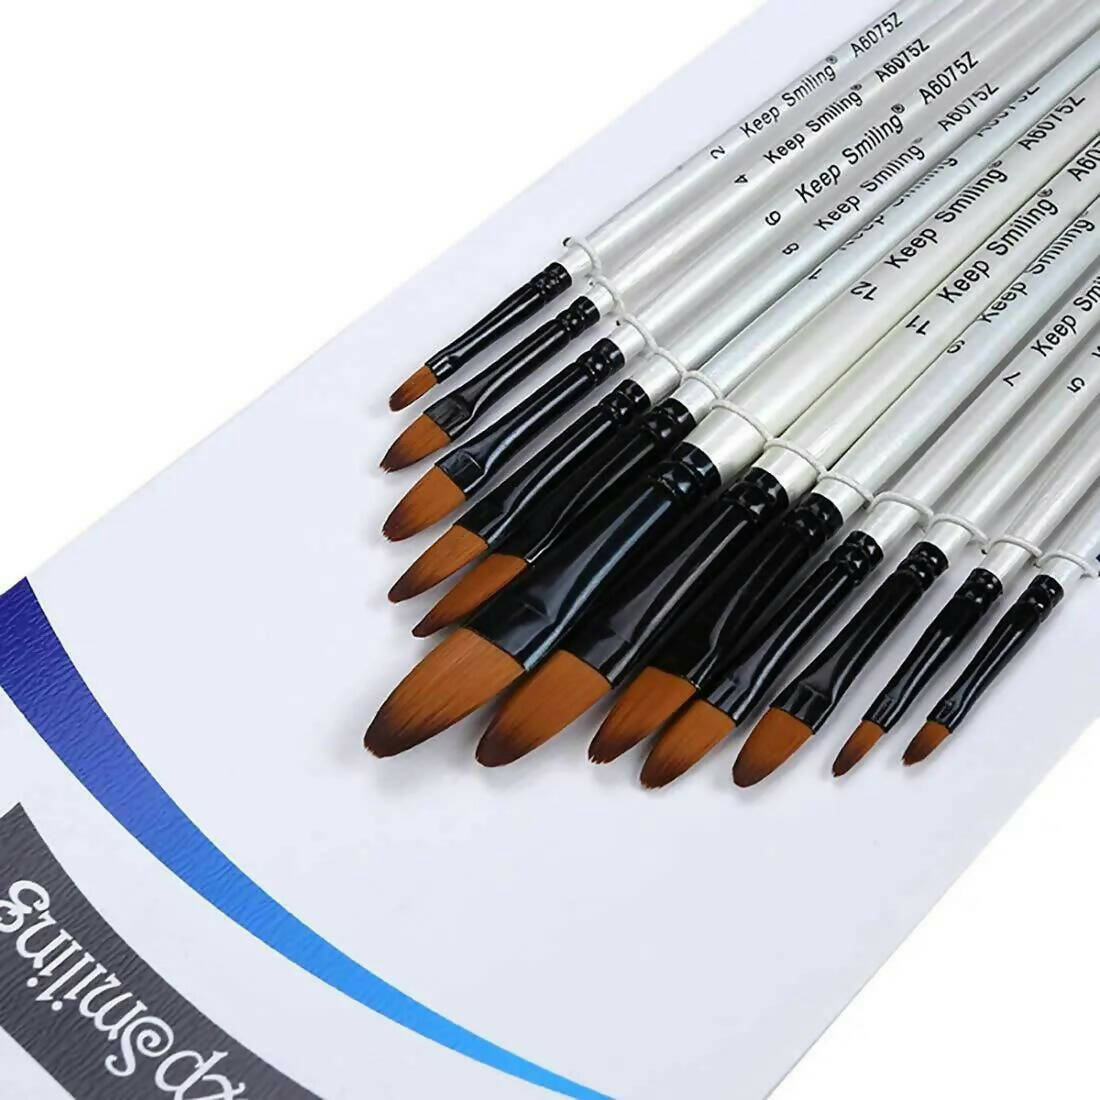 Keep Smilling Professional Artist Paint Brush Set of 12